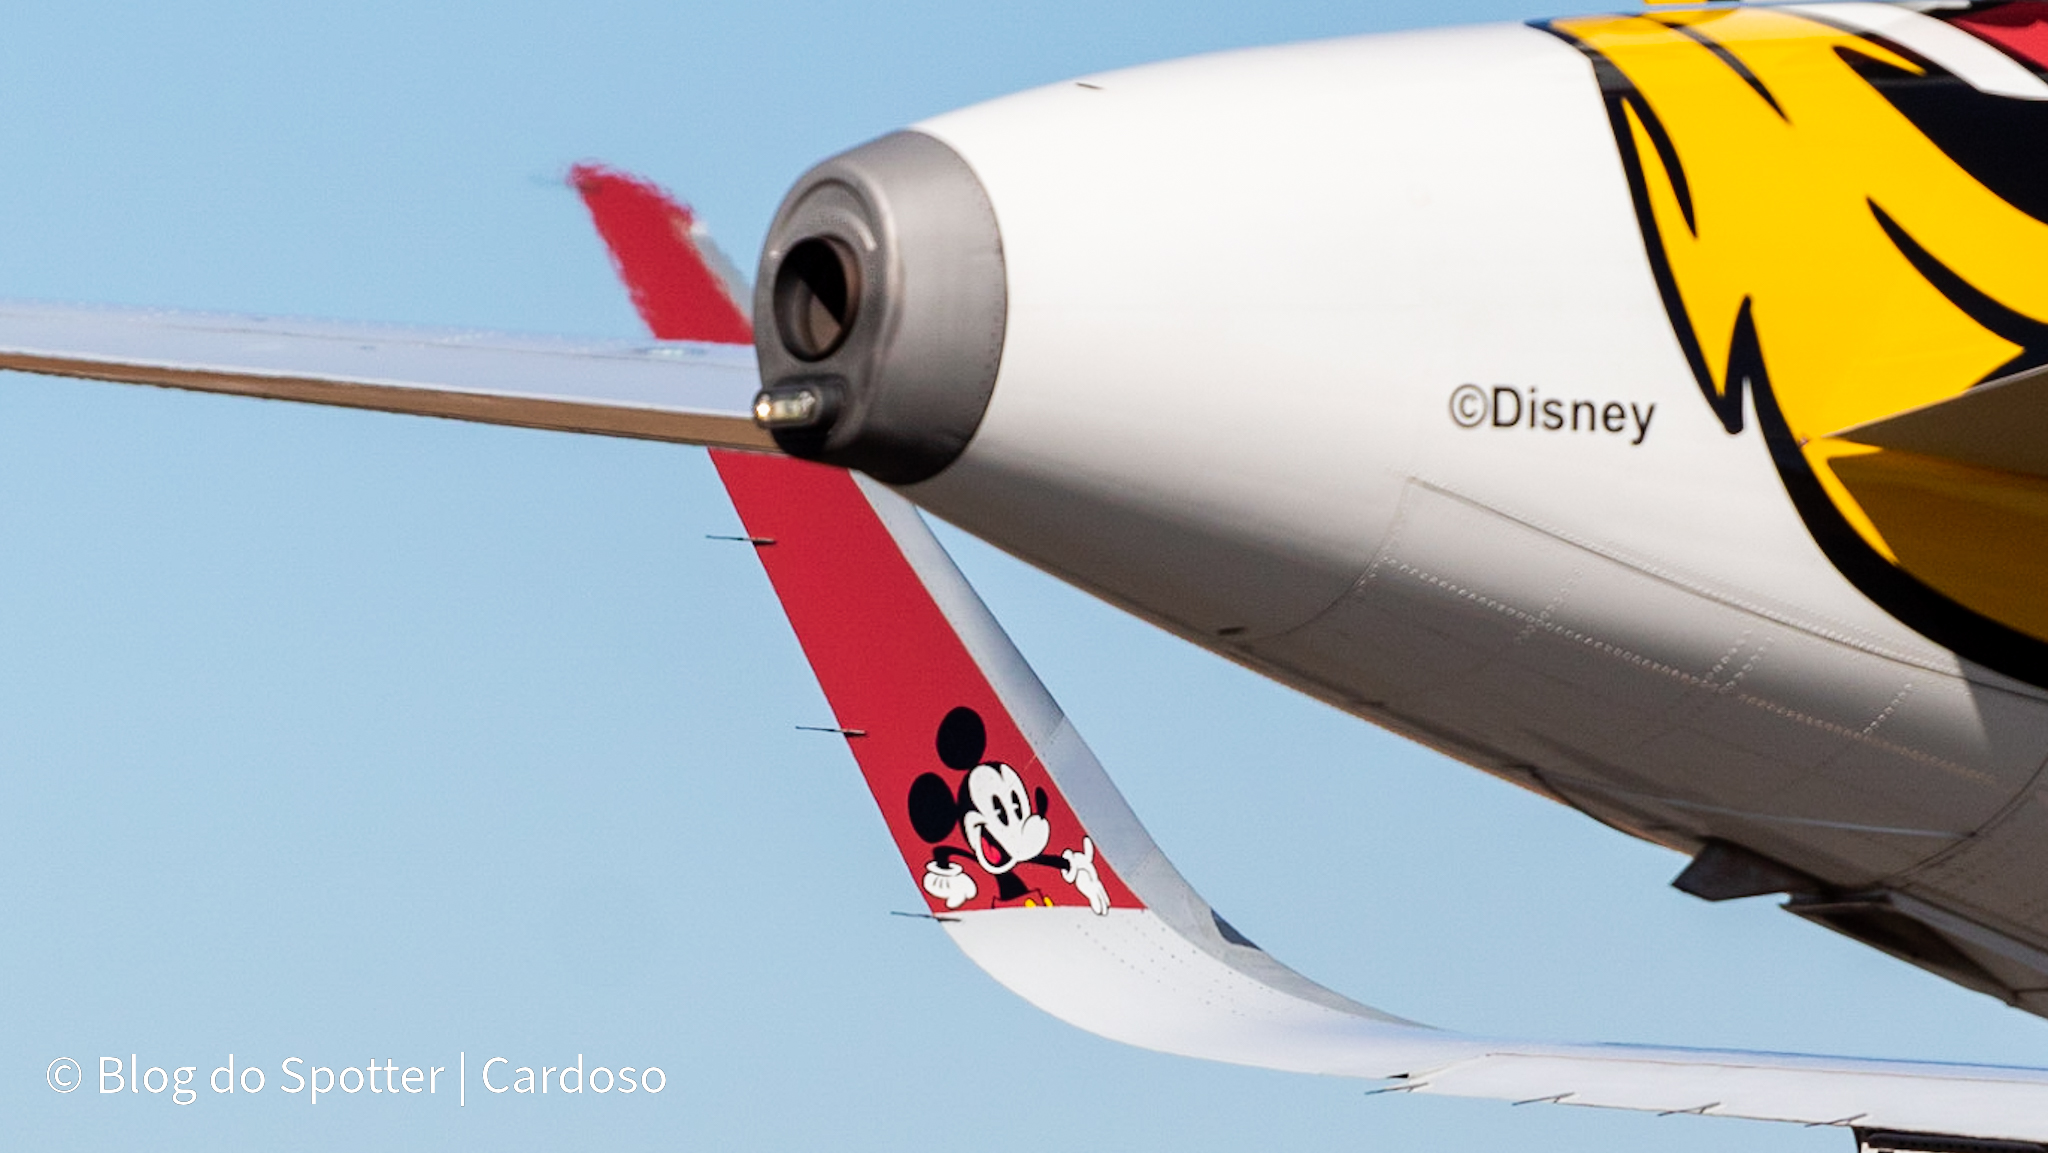 PR-YSH - Mickey Mouse Nas Nuvens - Airbus A320 NEO